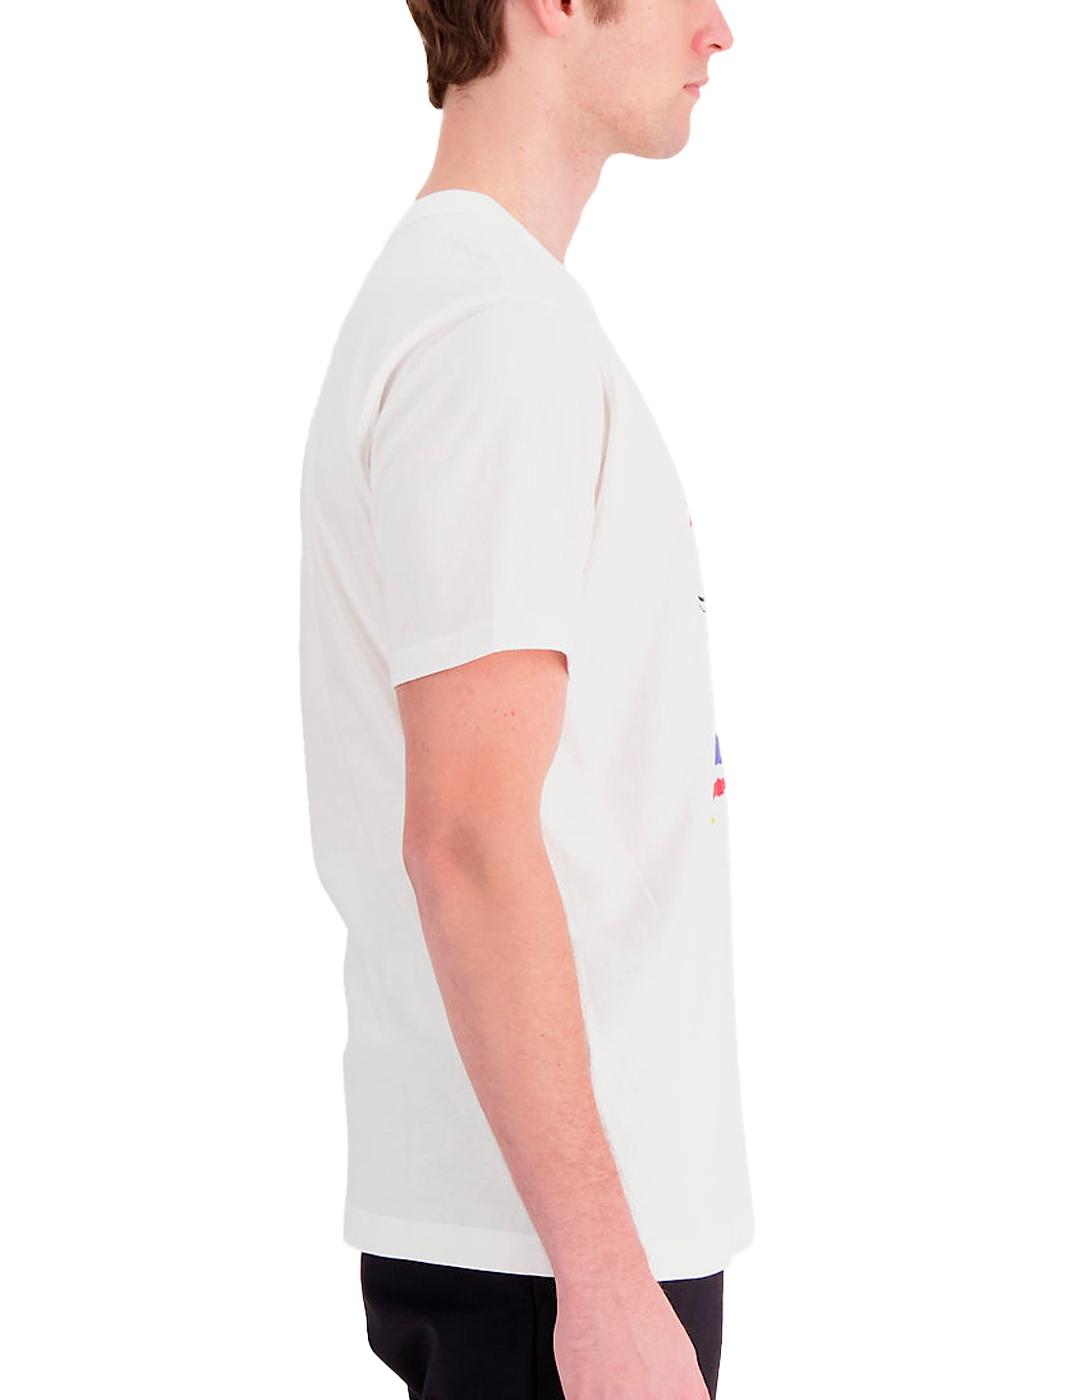 Camiseta New Balance Athletics Graphic Blanco